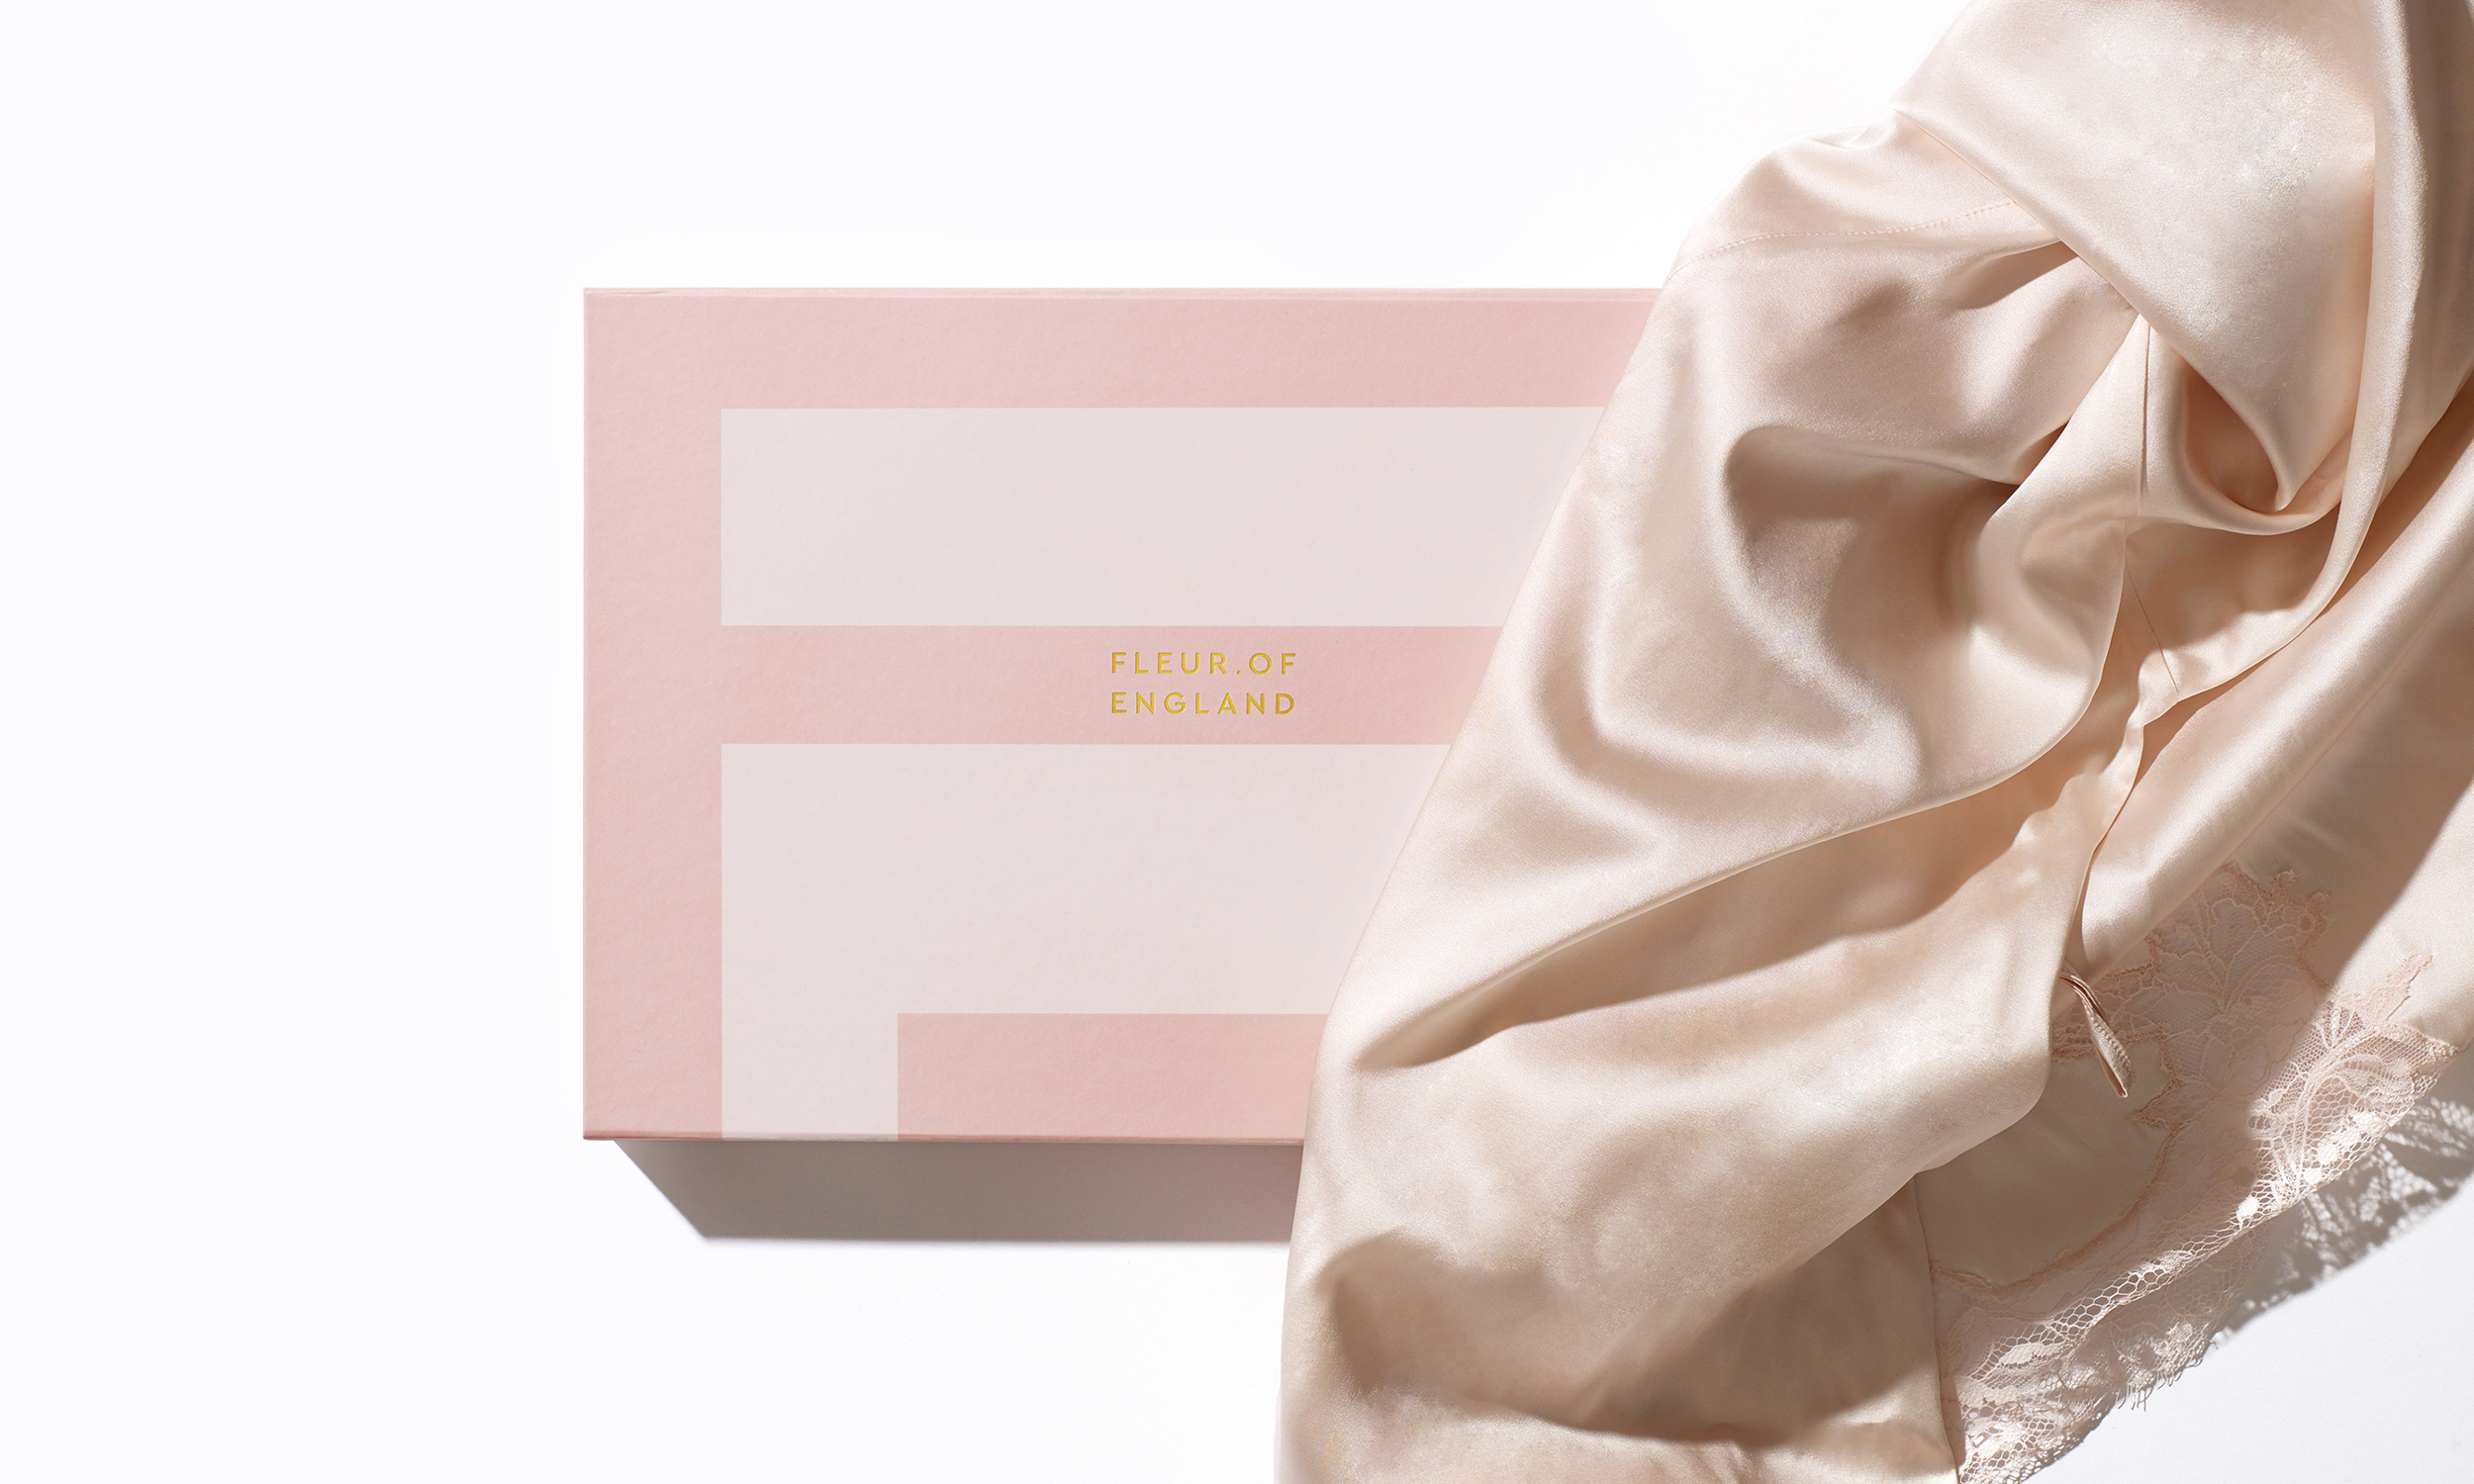 Luxury Lingerie Brand Fleur of England Redesigned by Popp Studio